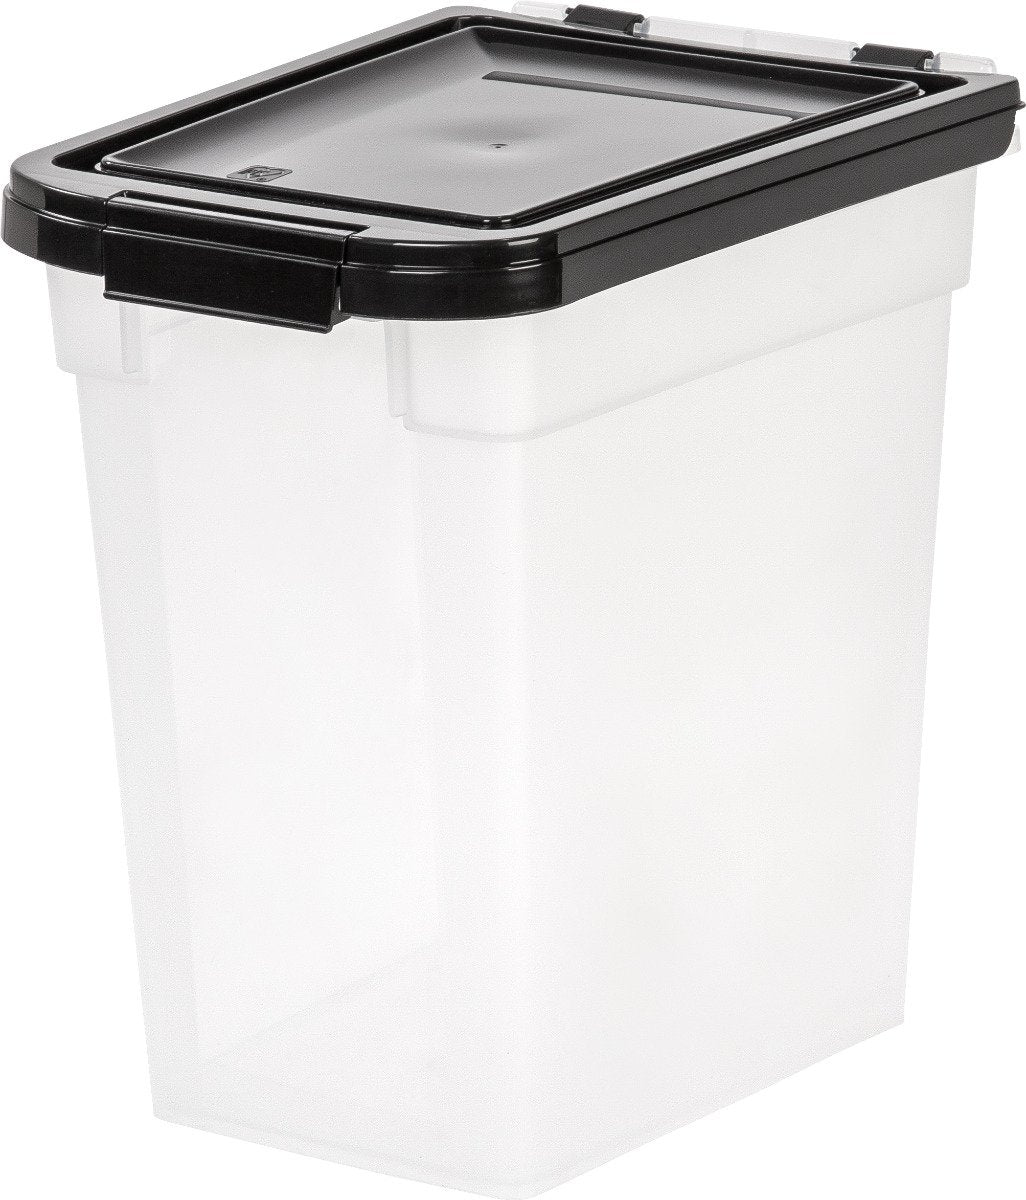 IRIS USA 42 lb Food Storage Container & Reviews